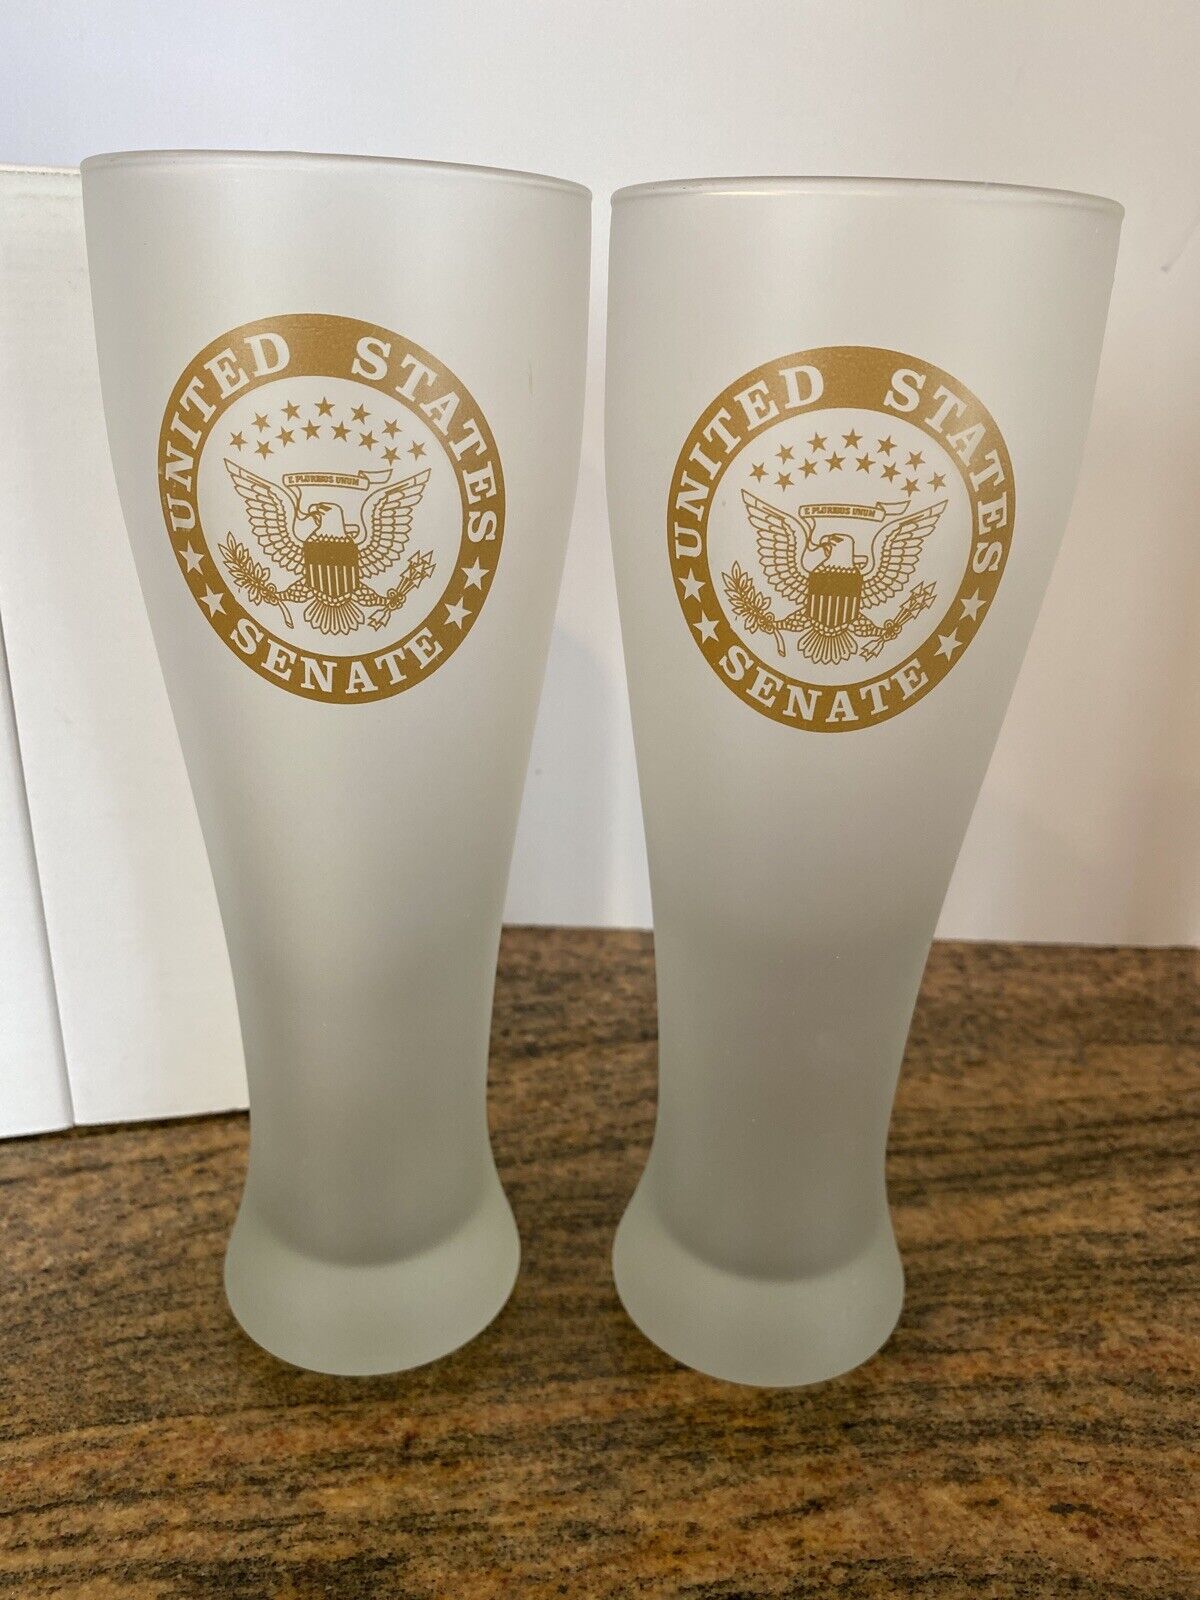 2 United States Senate Frosted Beer Glass Gold Eagle Seal Logo W/ Gift Shop Bag